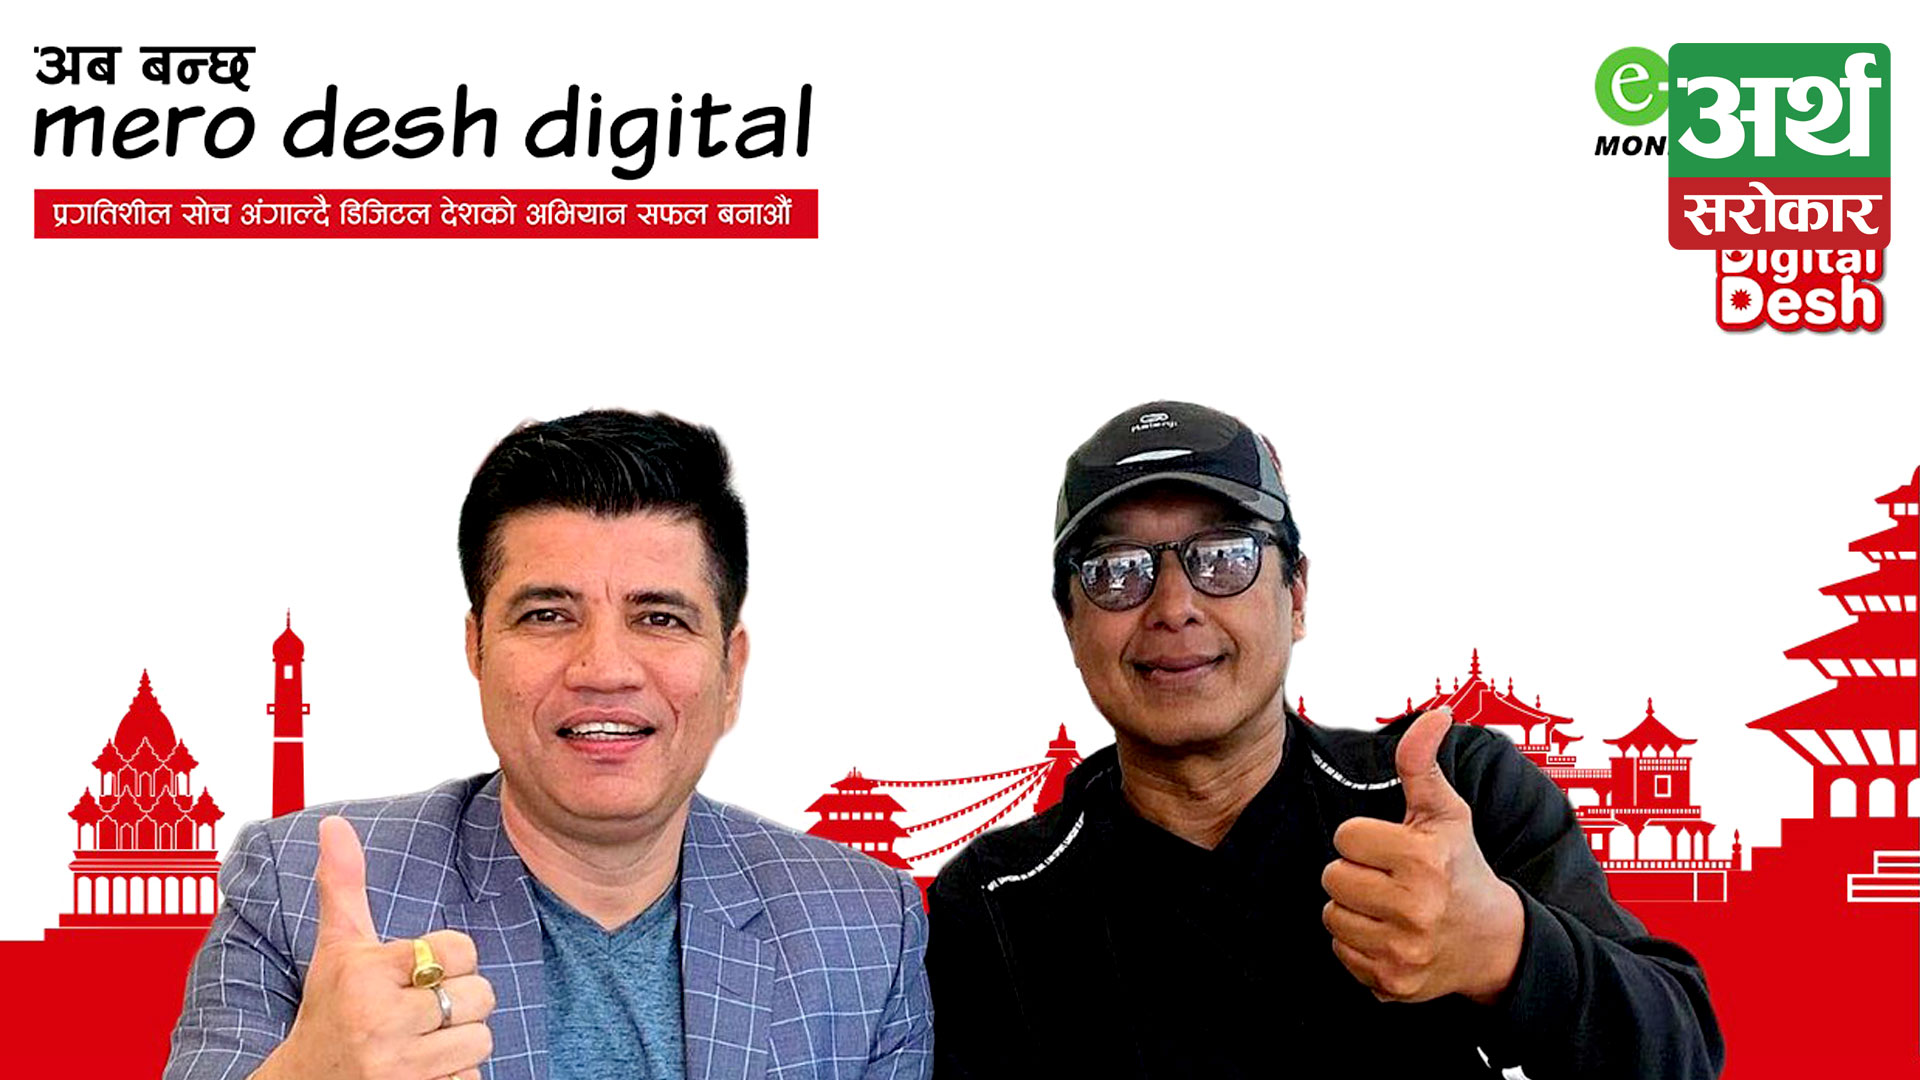 Mero Digital Desh- an initiative revolutionizing digital Remittance.